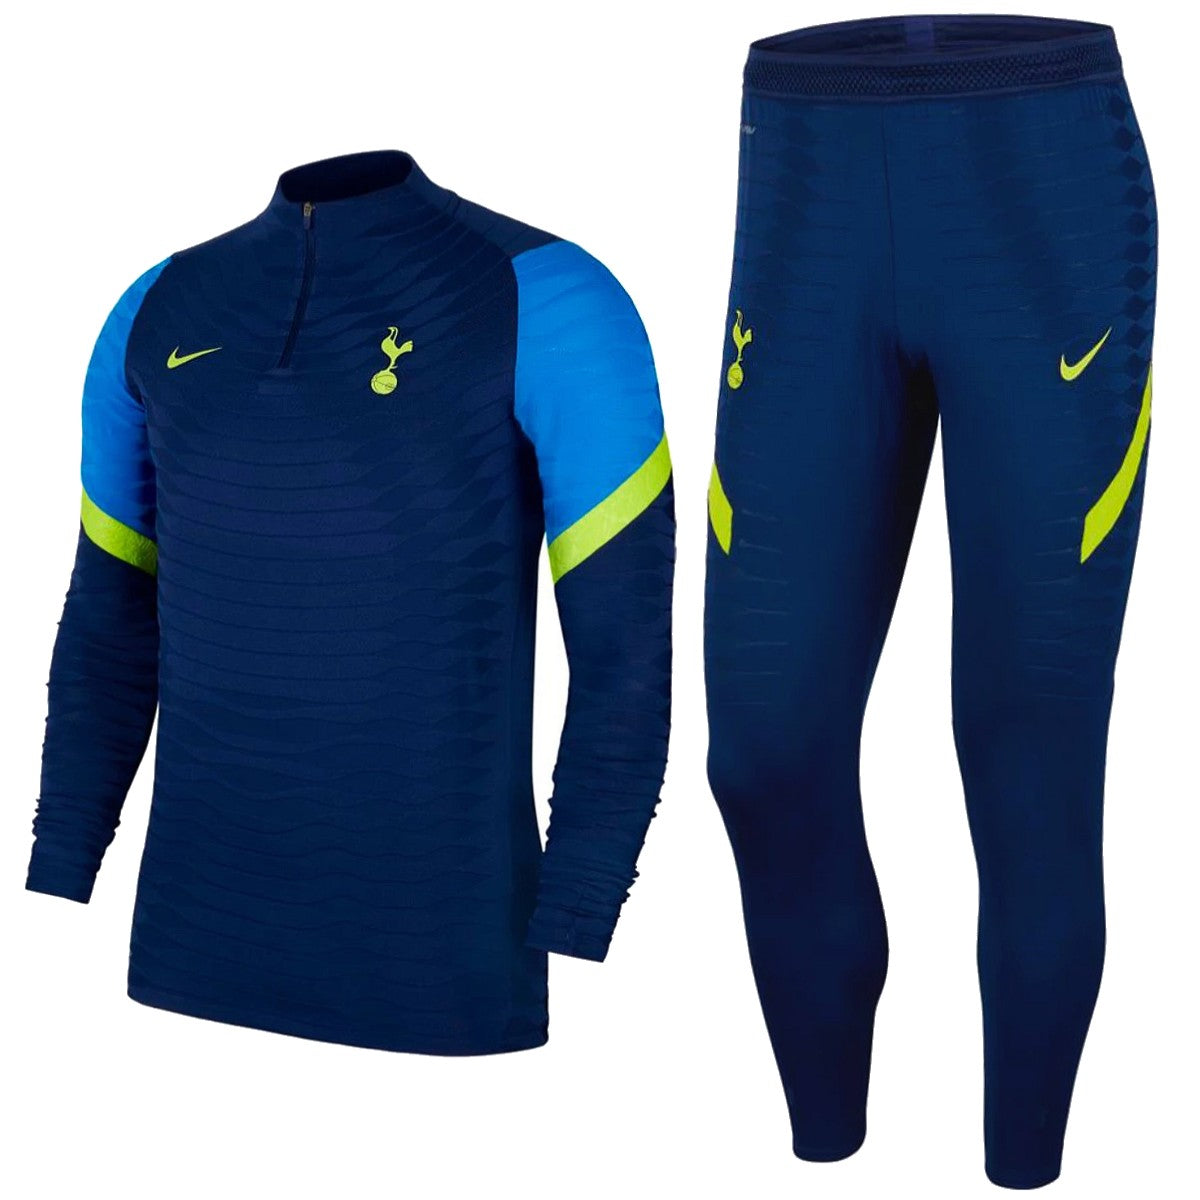 Tottenham Hotspur Elite Technical Soccer Tracksuit 2021/22 - Nike Men's Small / Men's Large